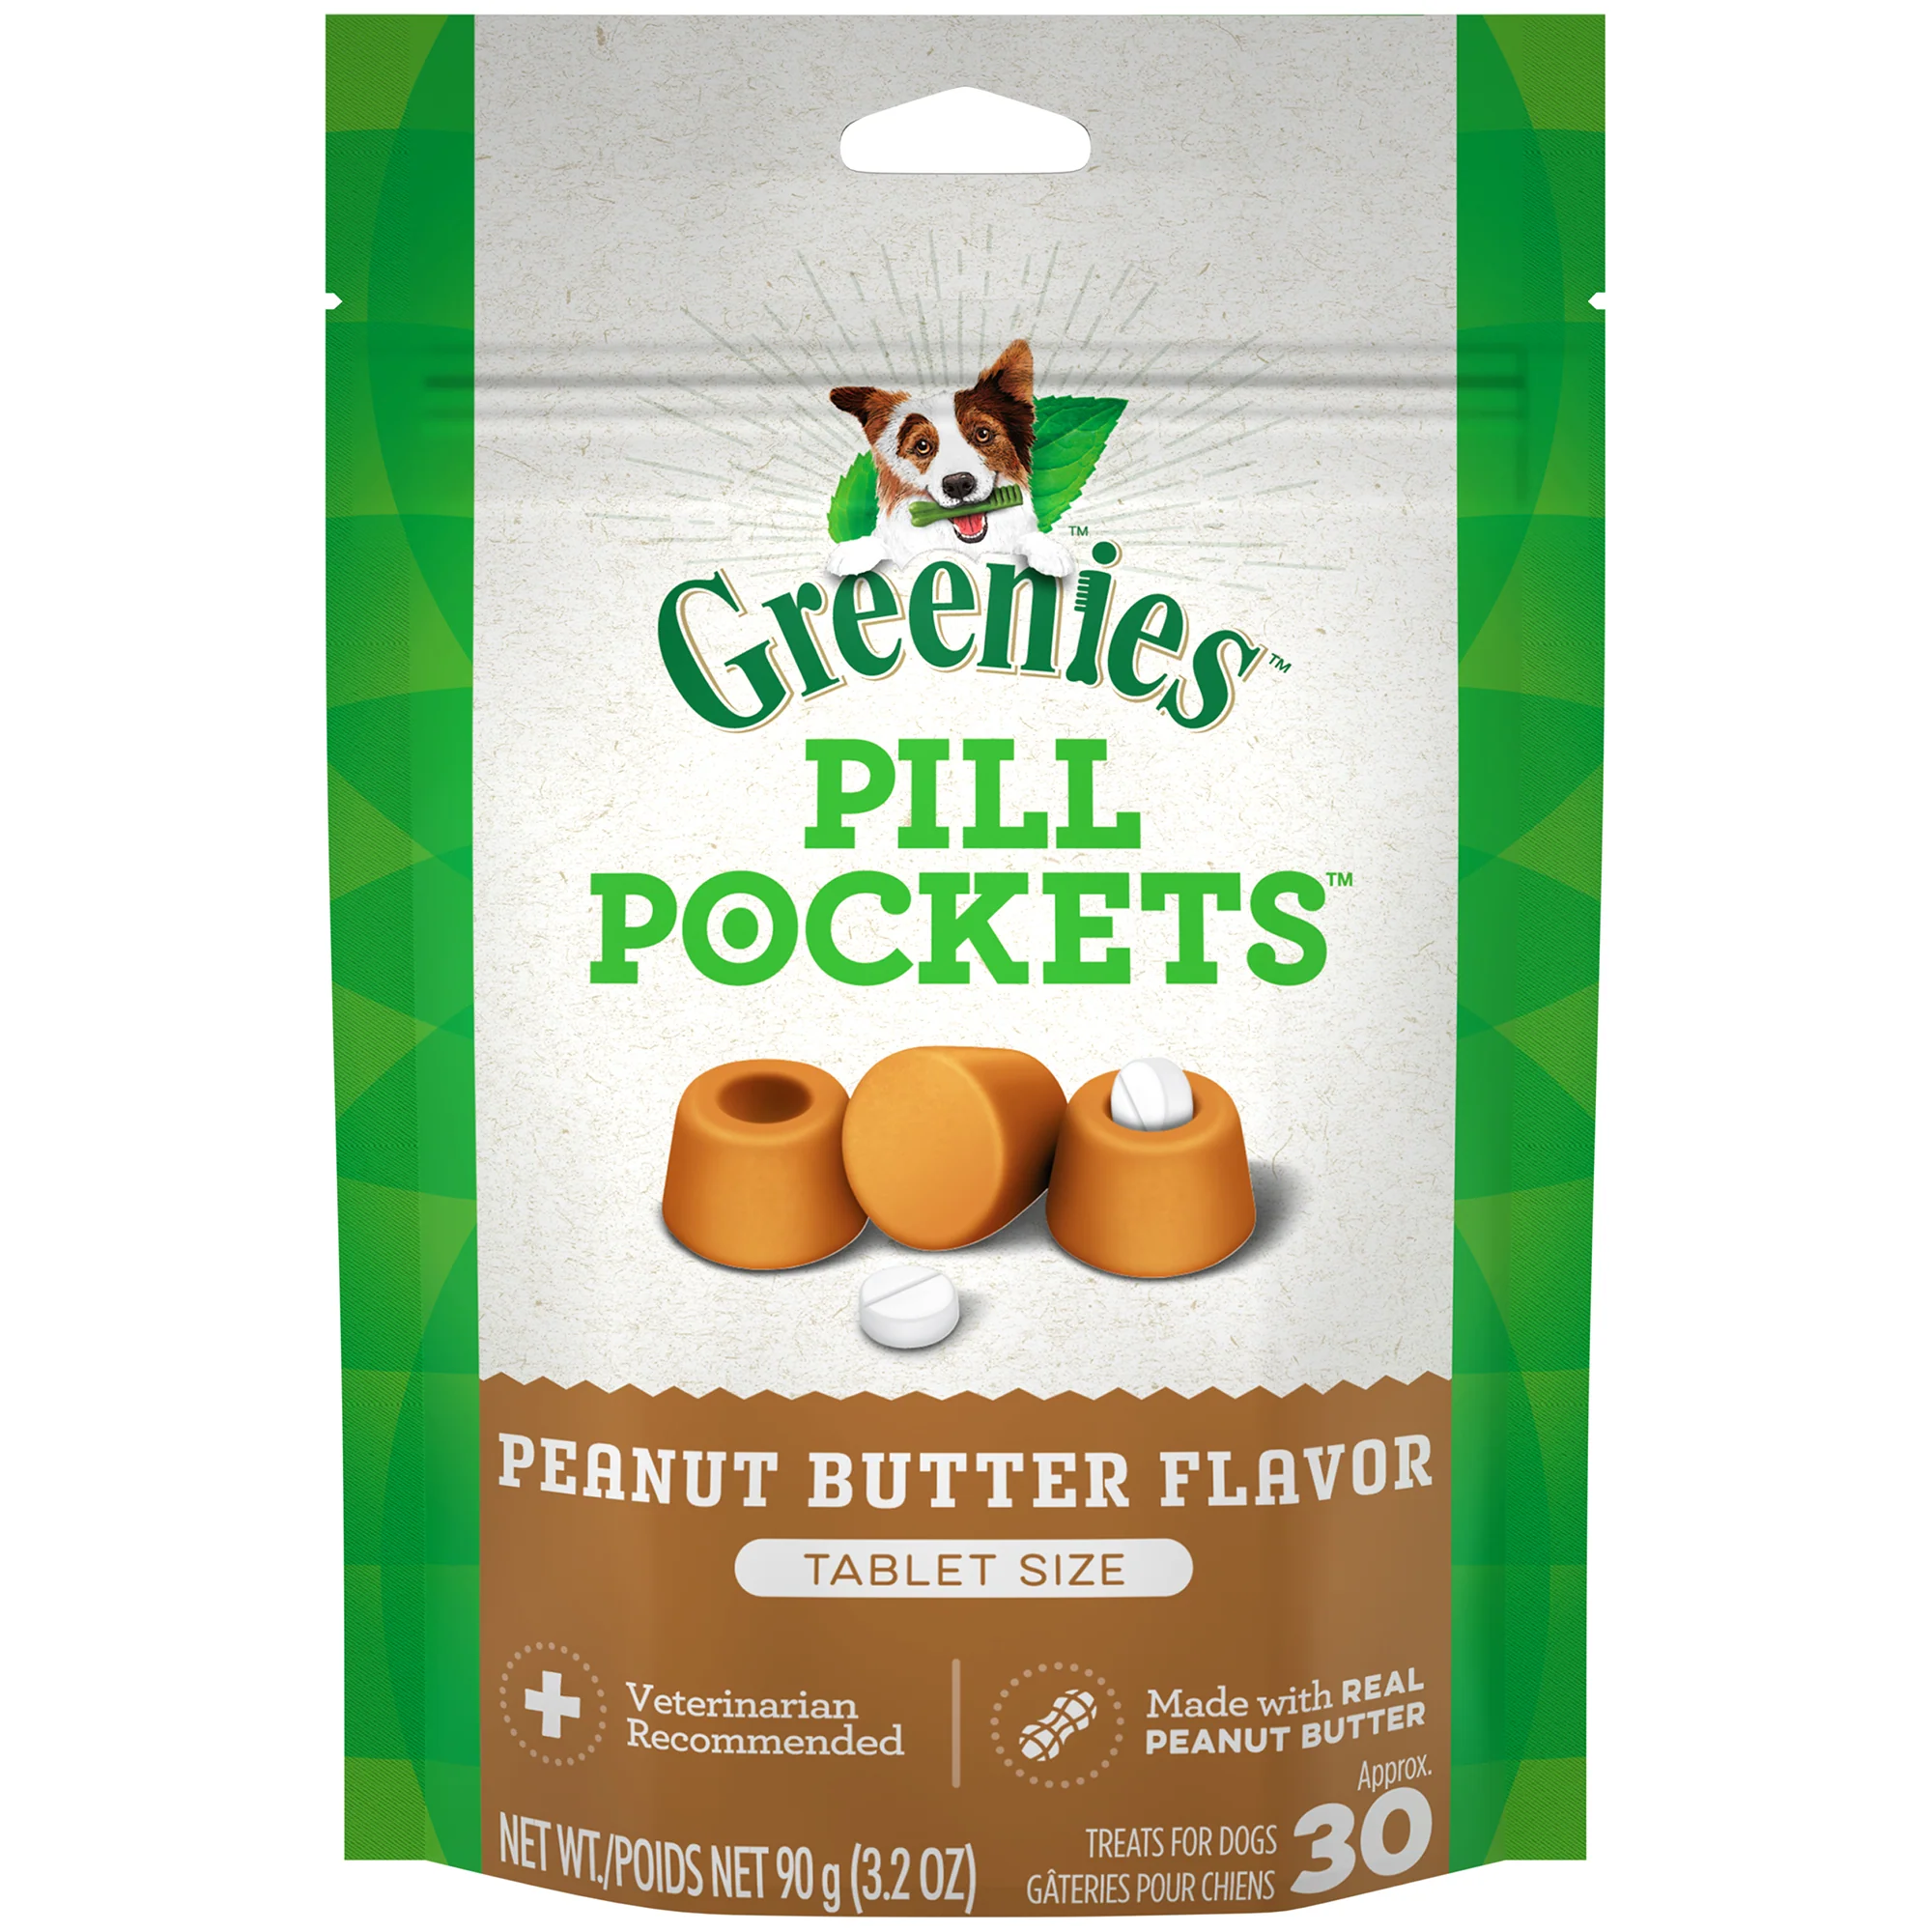 Greenies Pill Pockets Peanut Butter Tablet Size 3.2oz